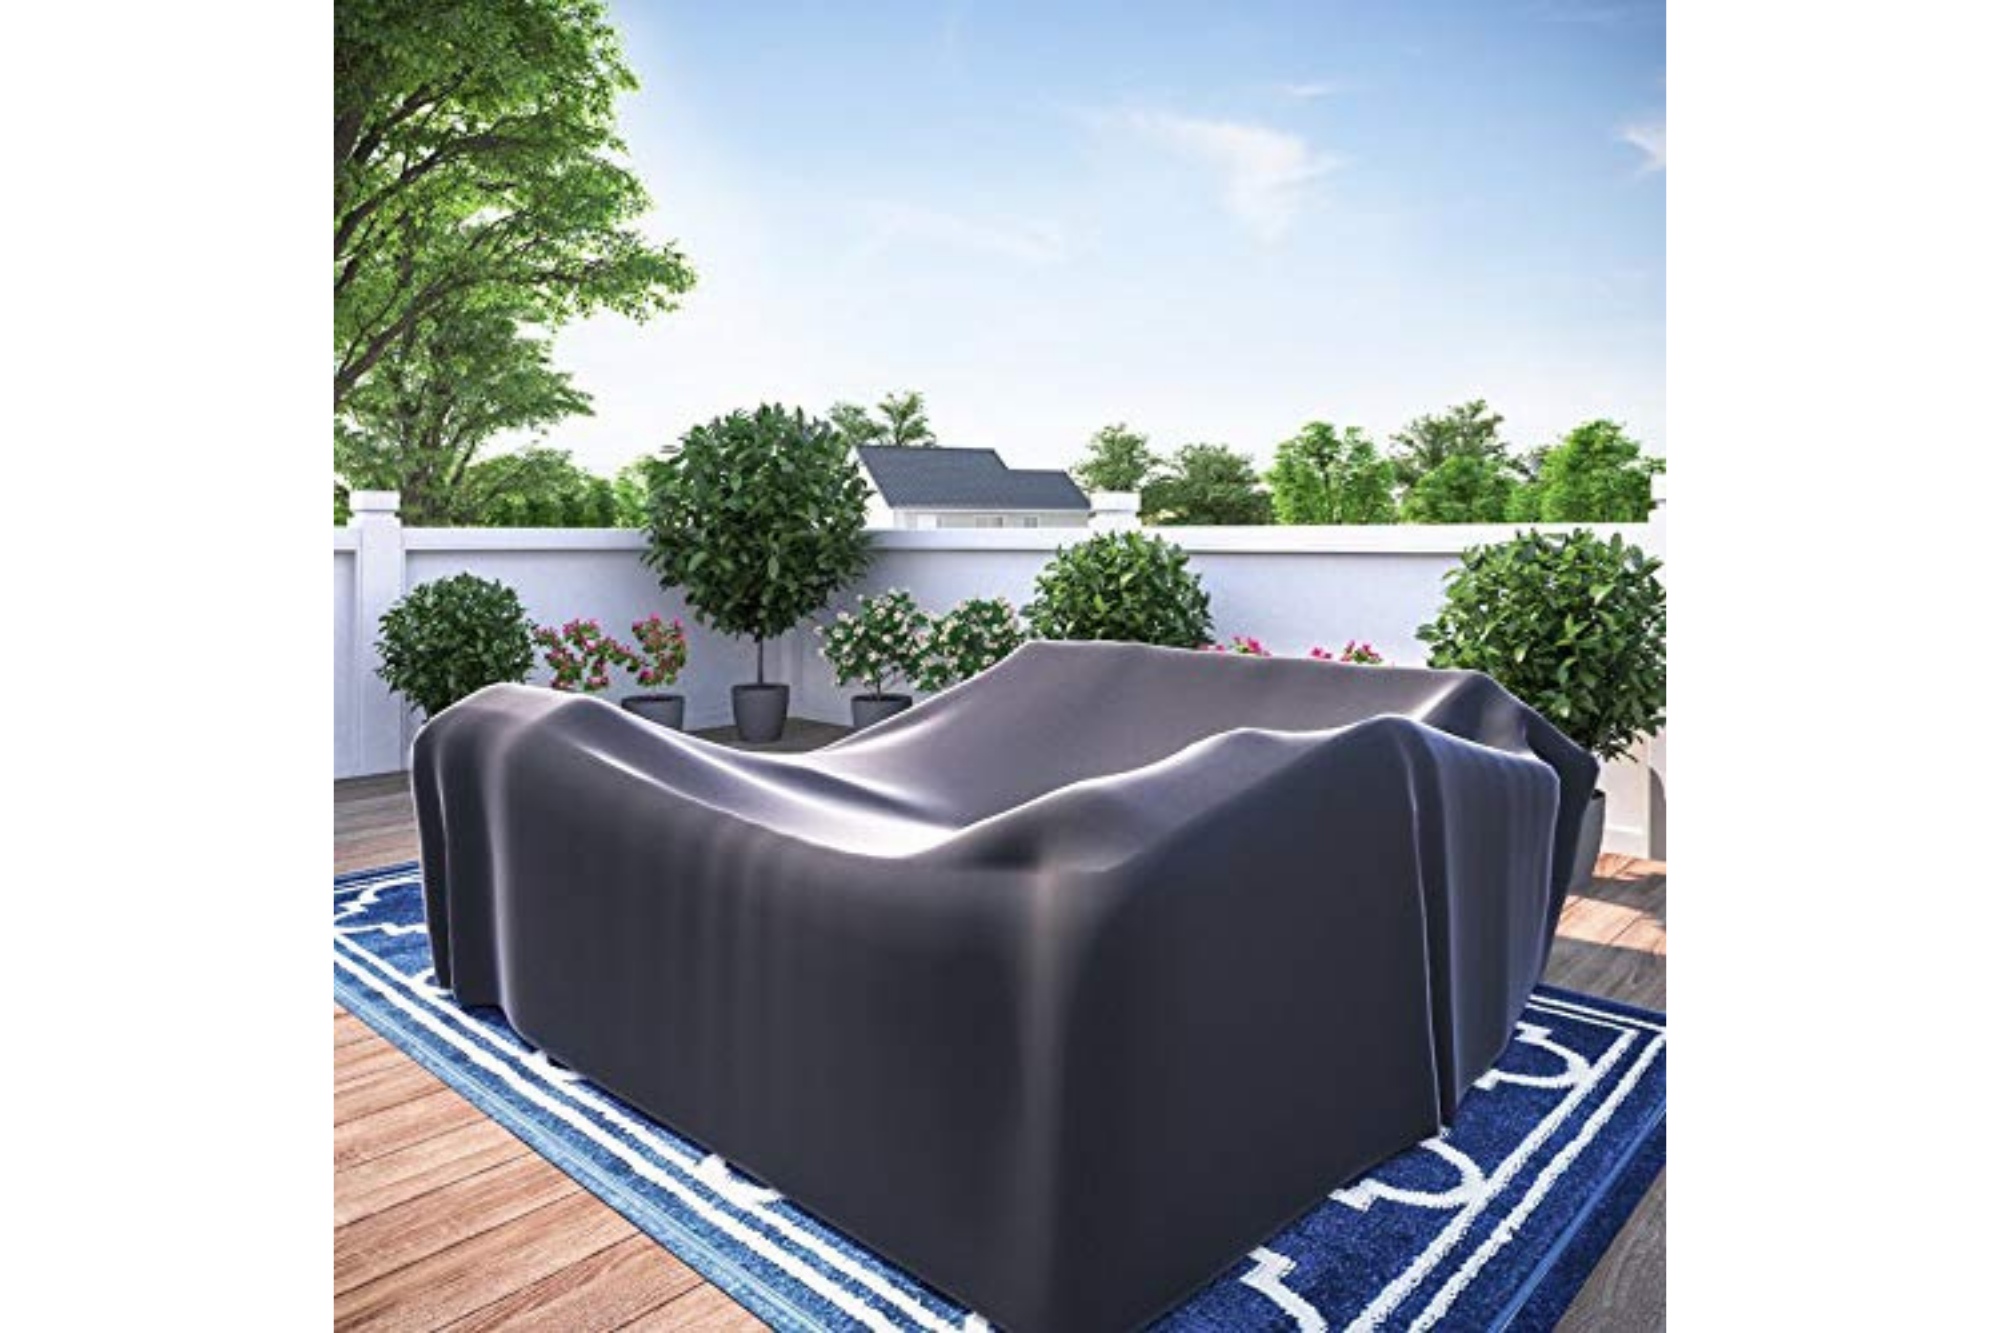 SunHaven Deluxe 15 Ft x 15 Ft Outdoor Patio Furniture Cover